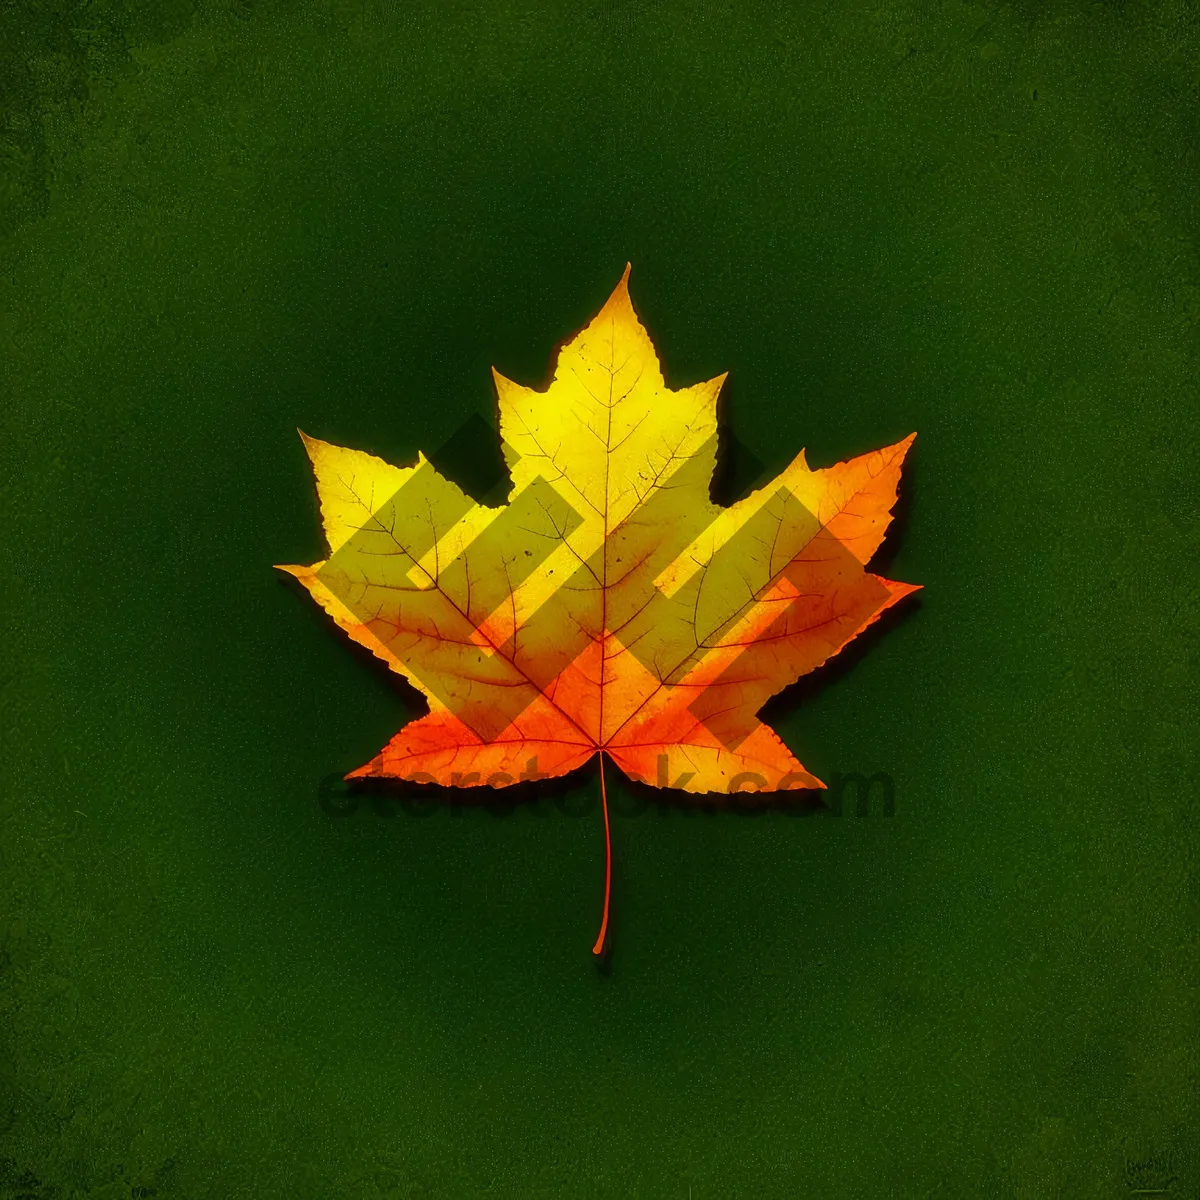 Picture of Vibrant Autumn Maple Leaf